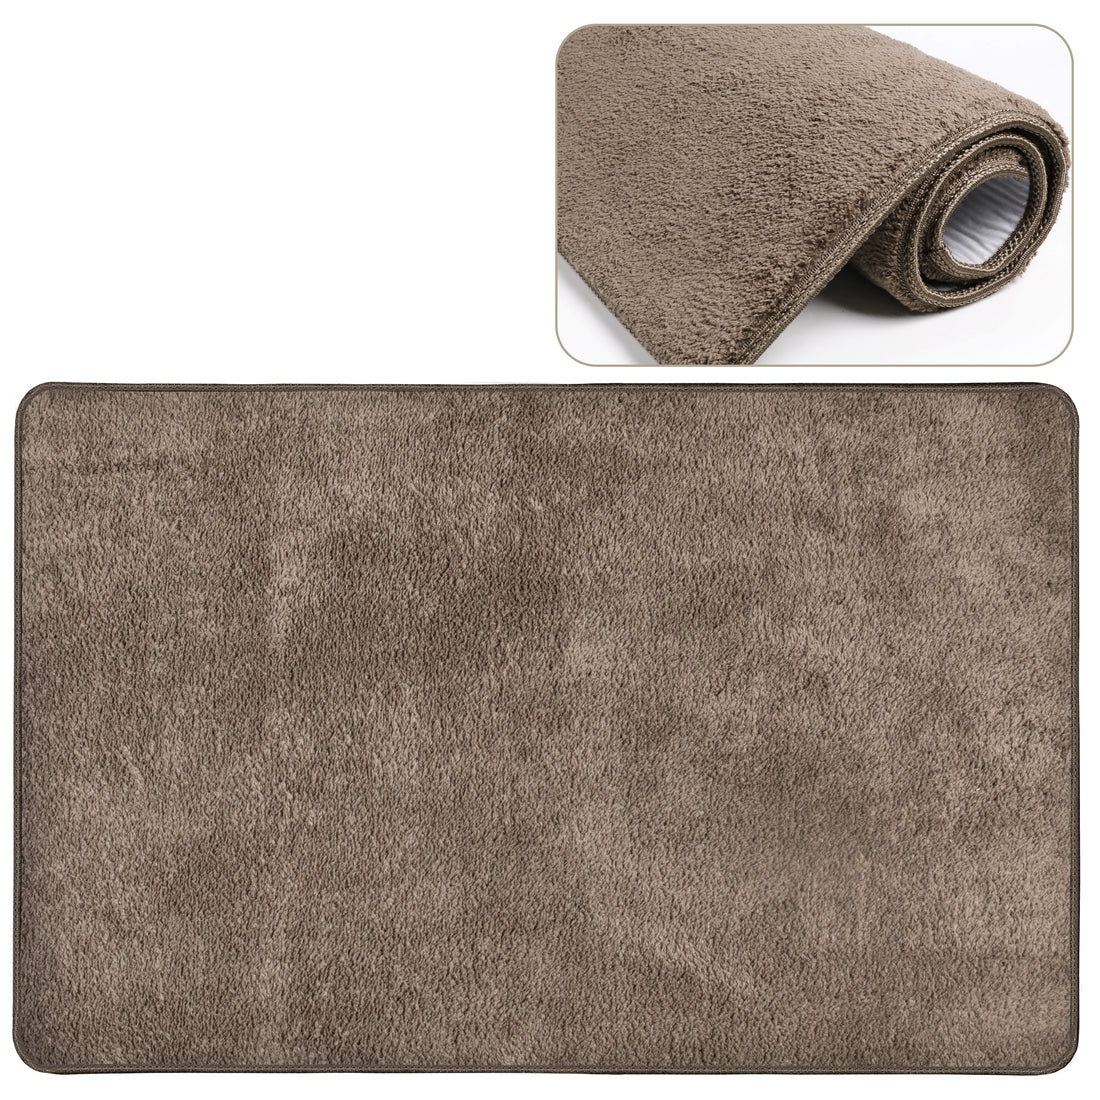 Bullnose Carpet Stair Treads - Brown; Ultra Plush Soft